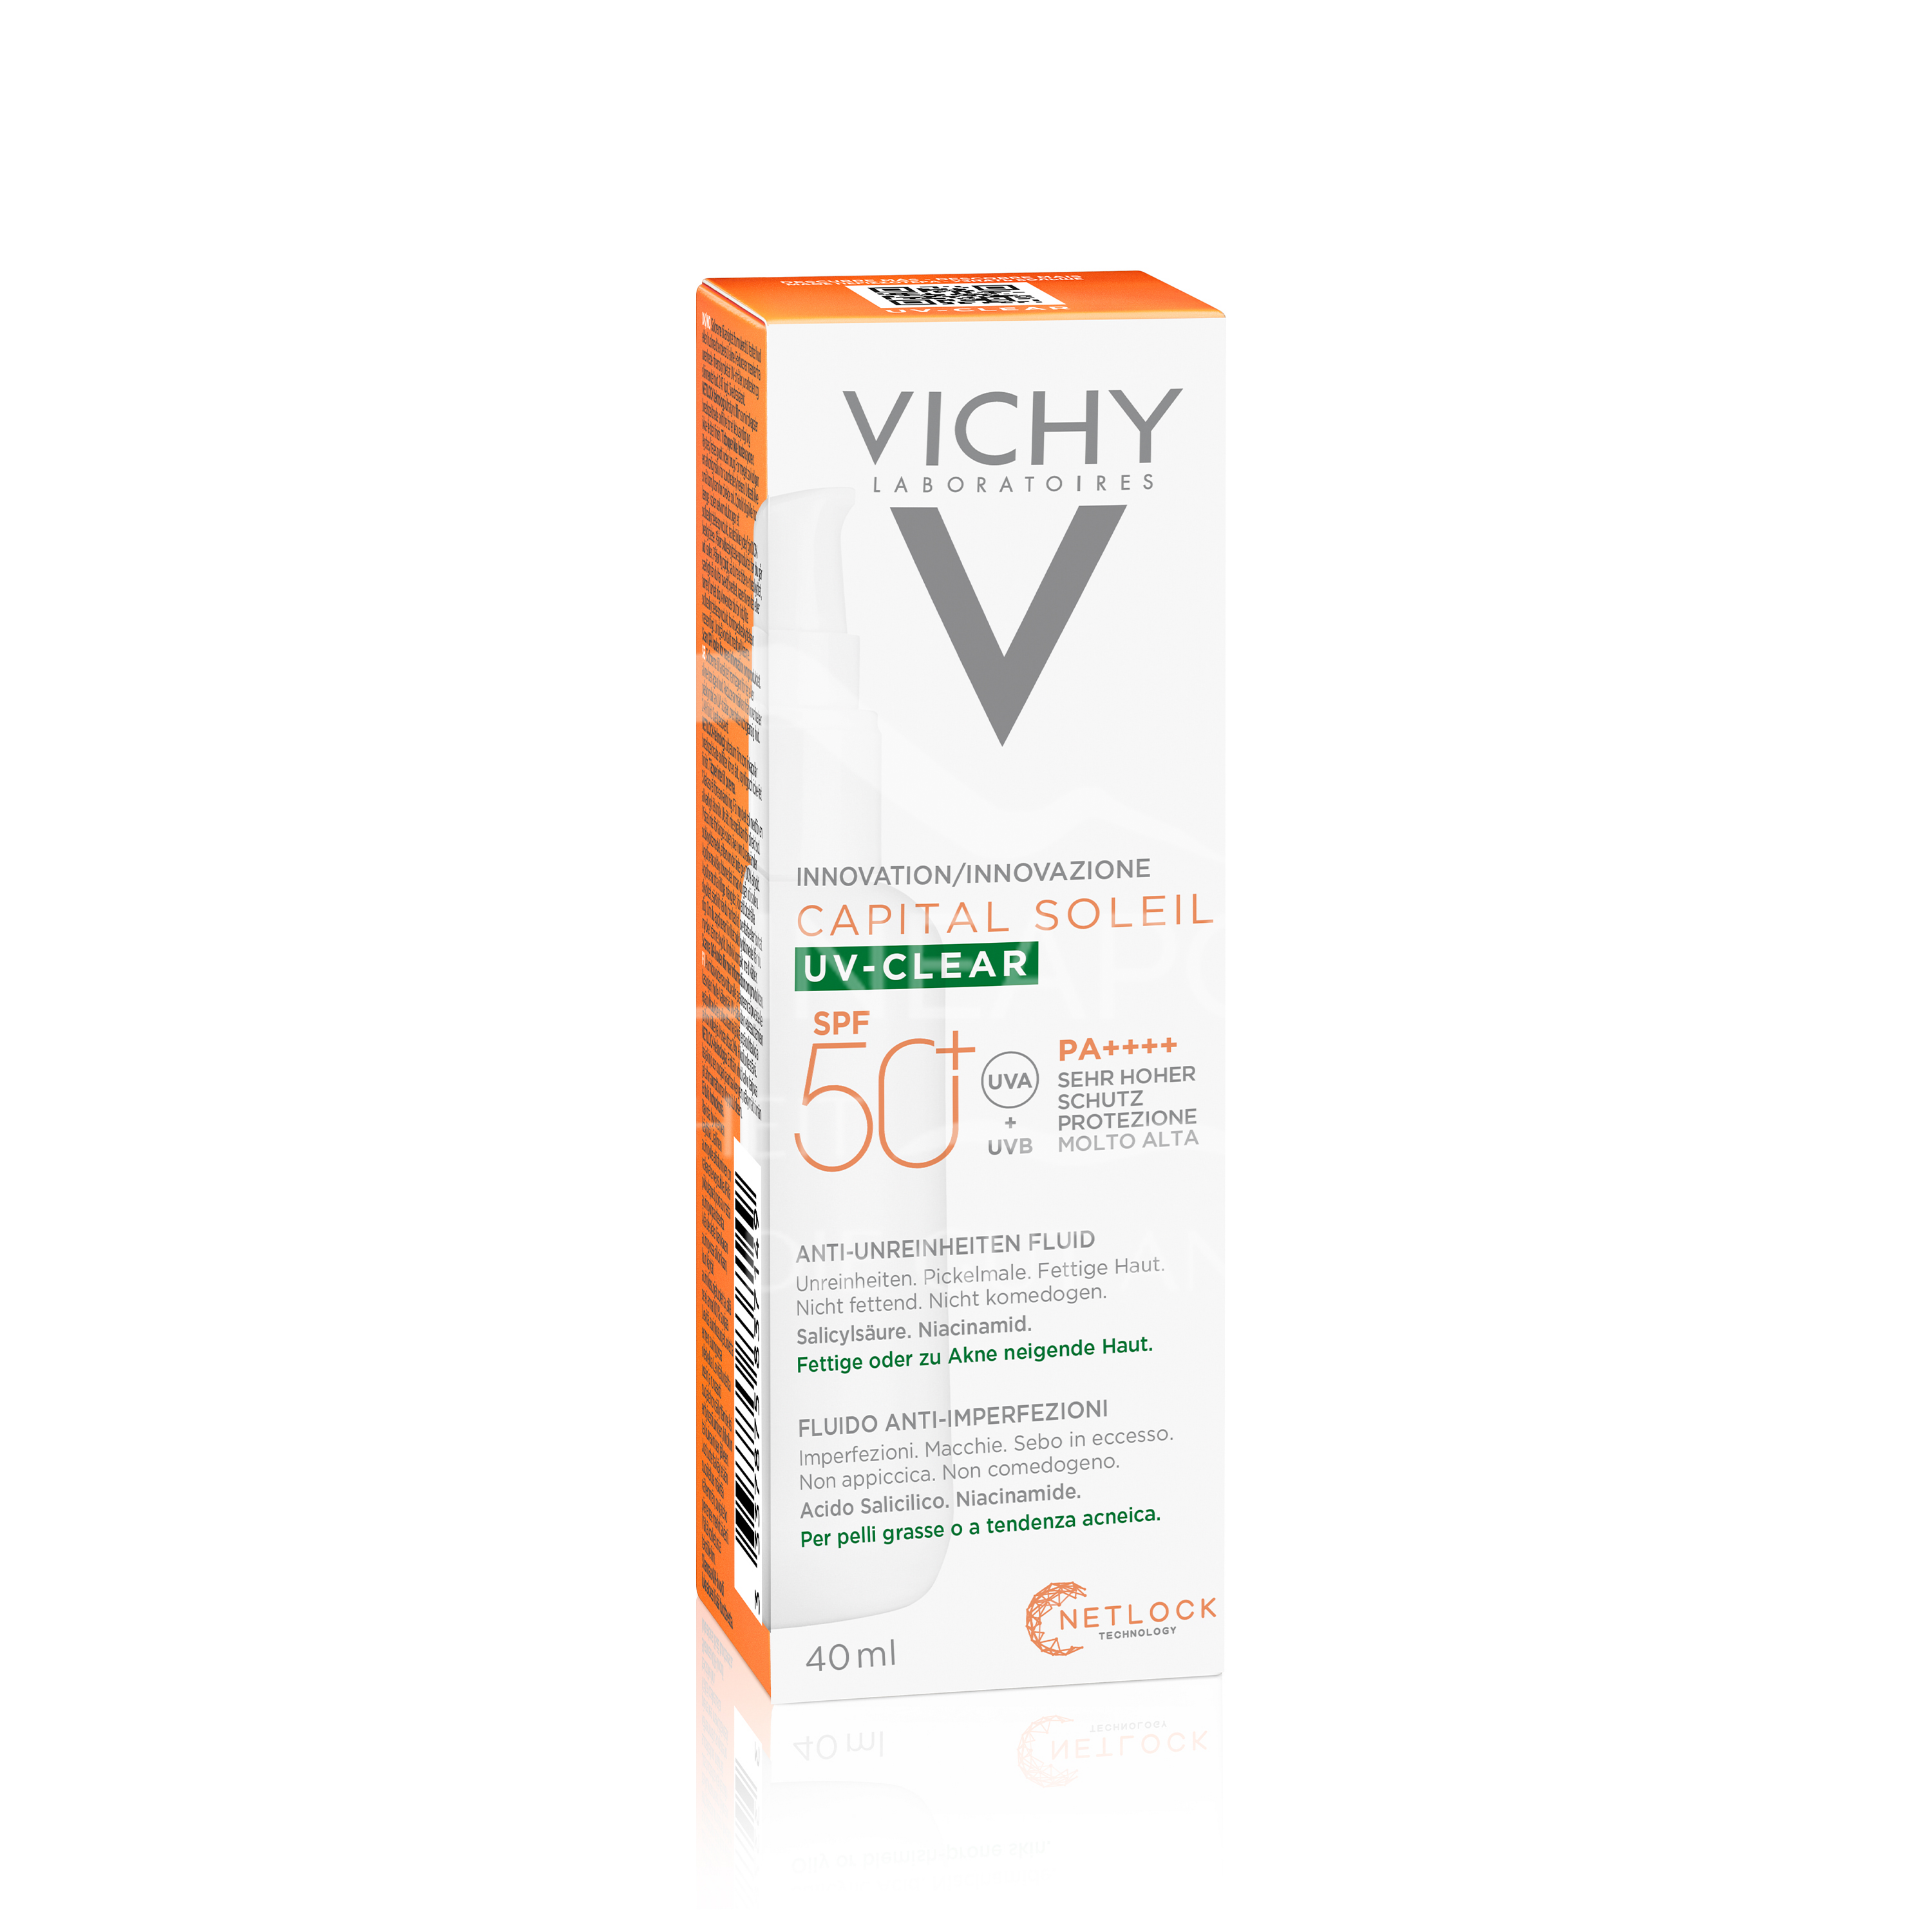 Vichy Capital Soleil UV-Clear LSF 50+ Anti-Unreinheiten Fluid